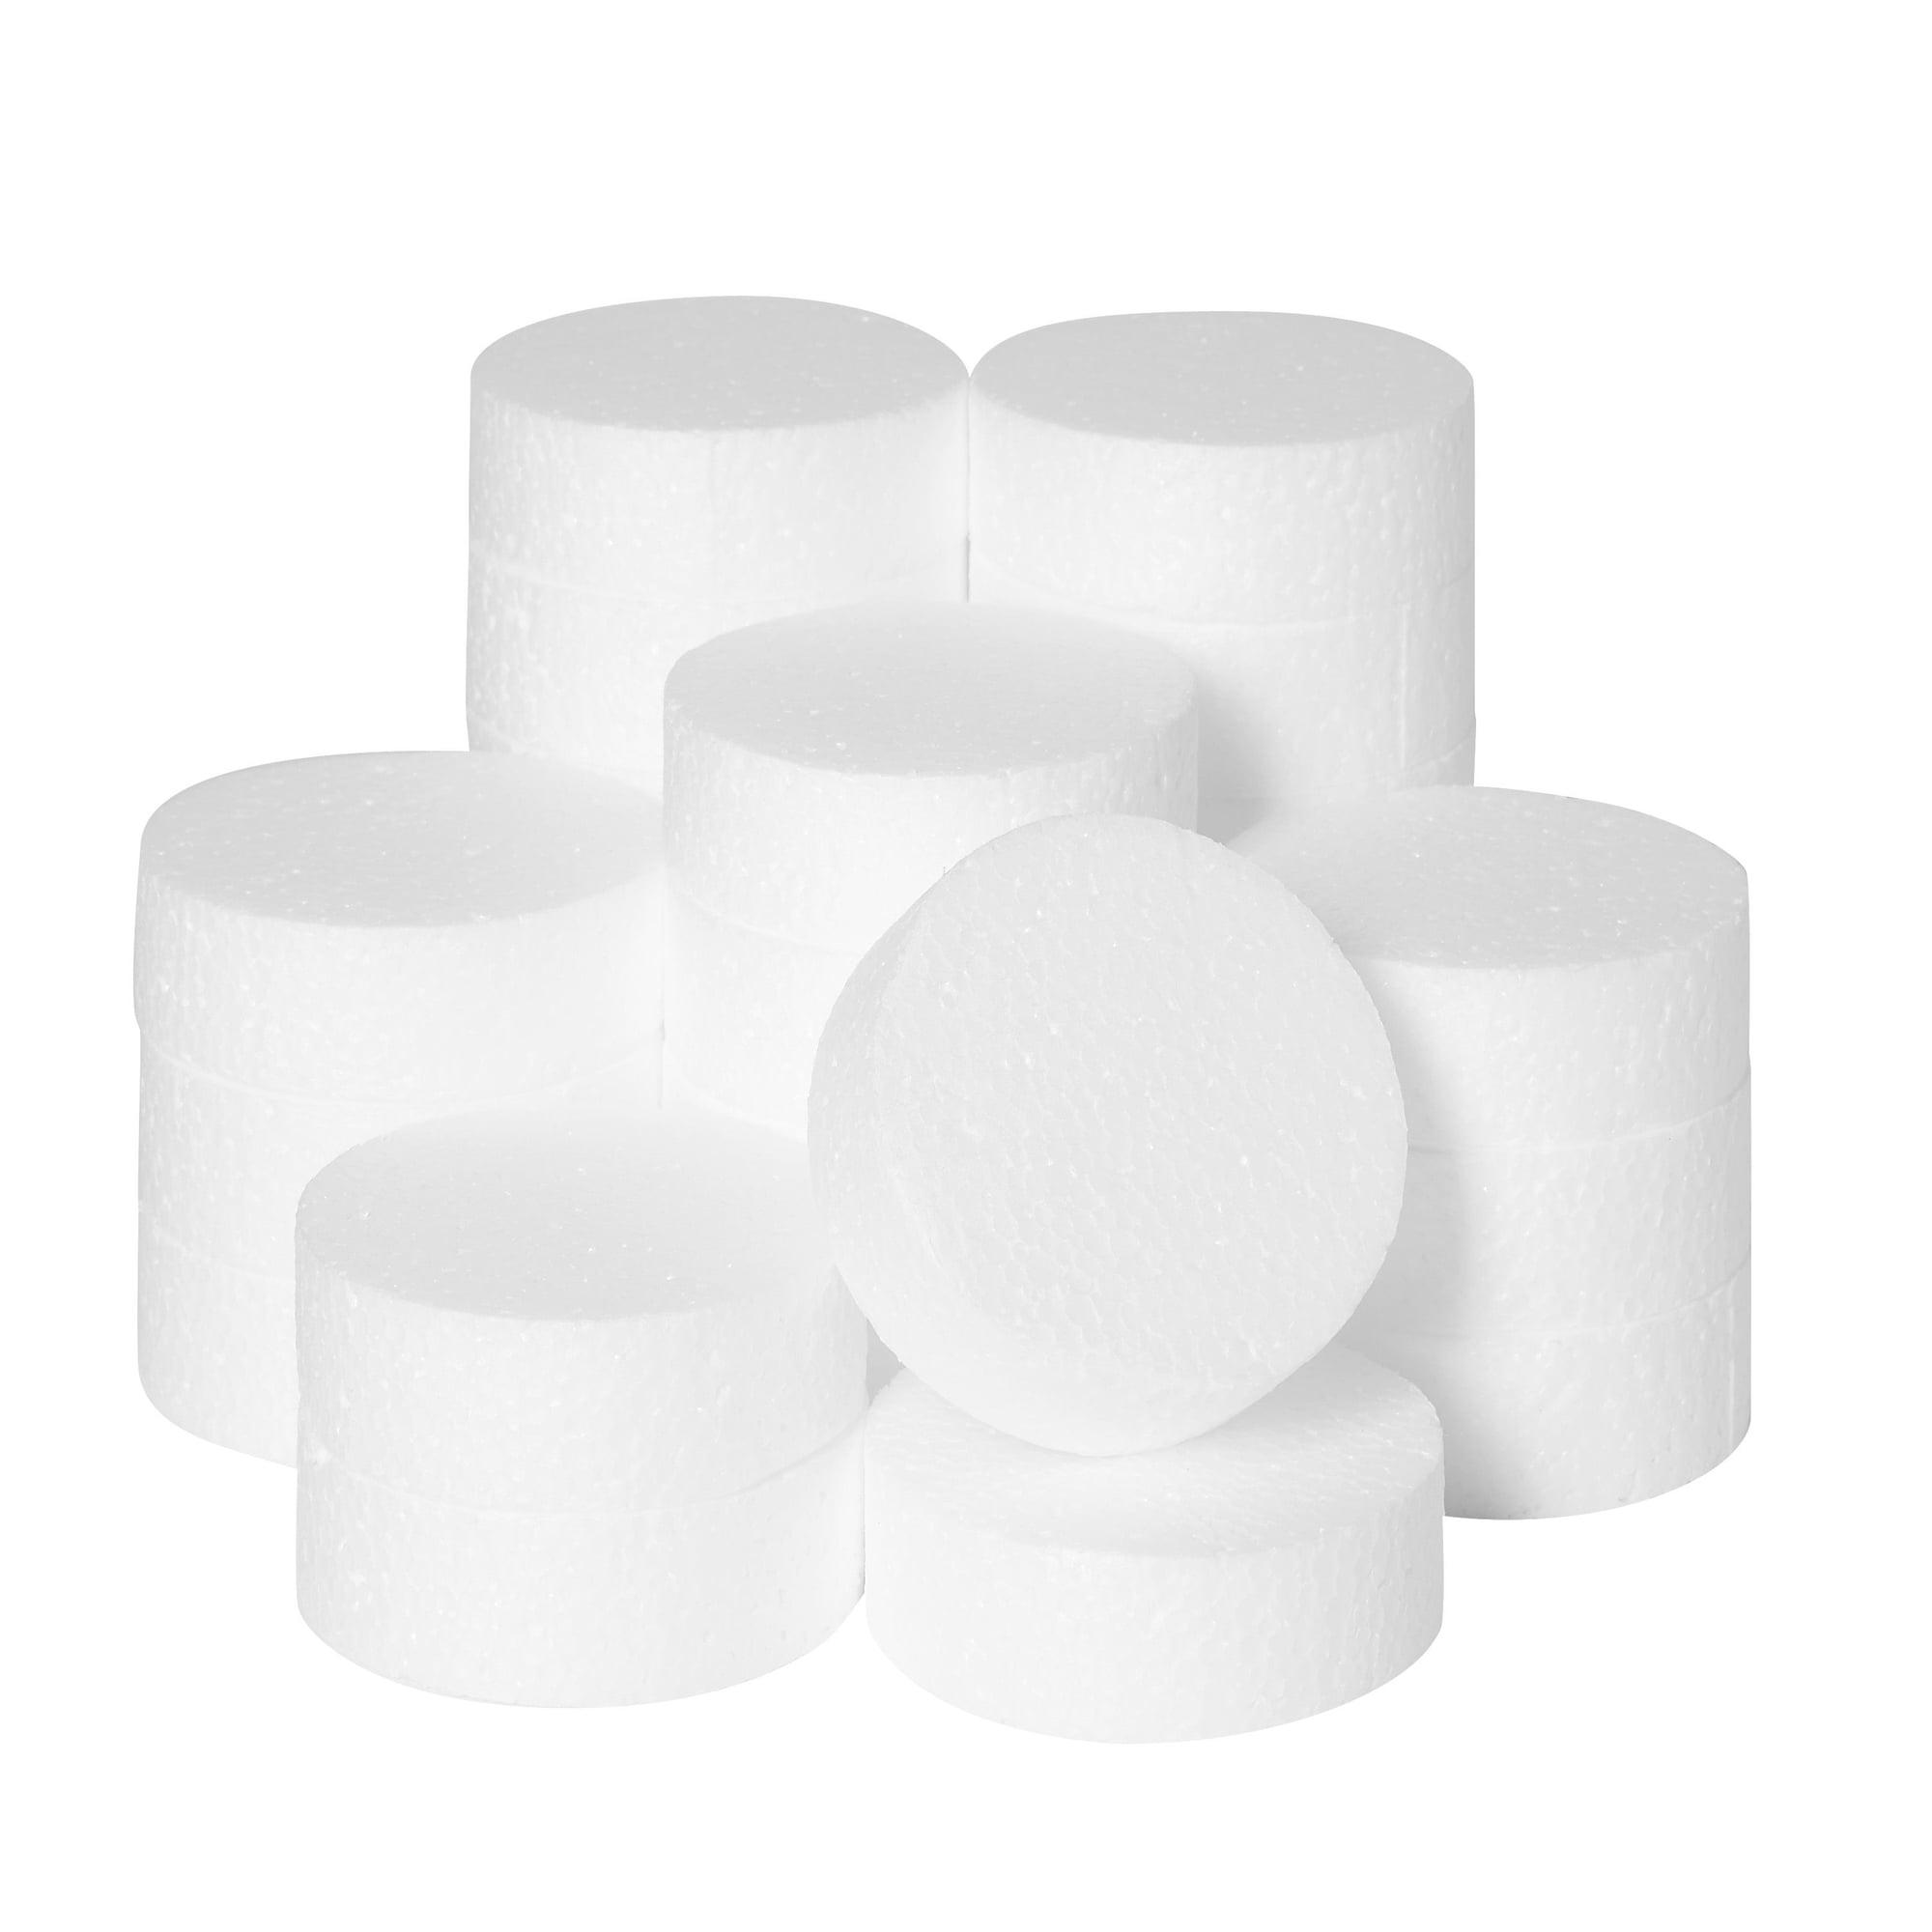 CYEAH 16 PCS Round Styrofoam Discs 4 Inch Foam Circles for Craft